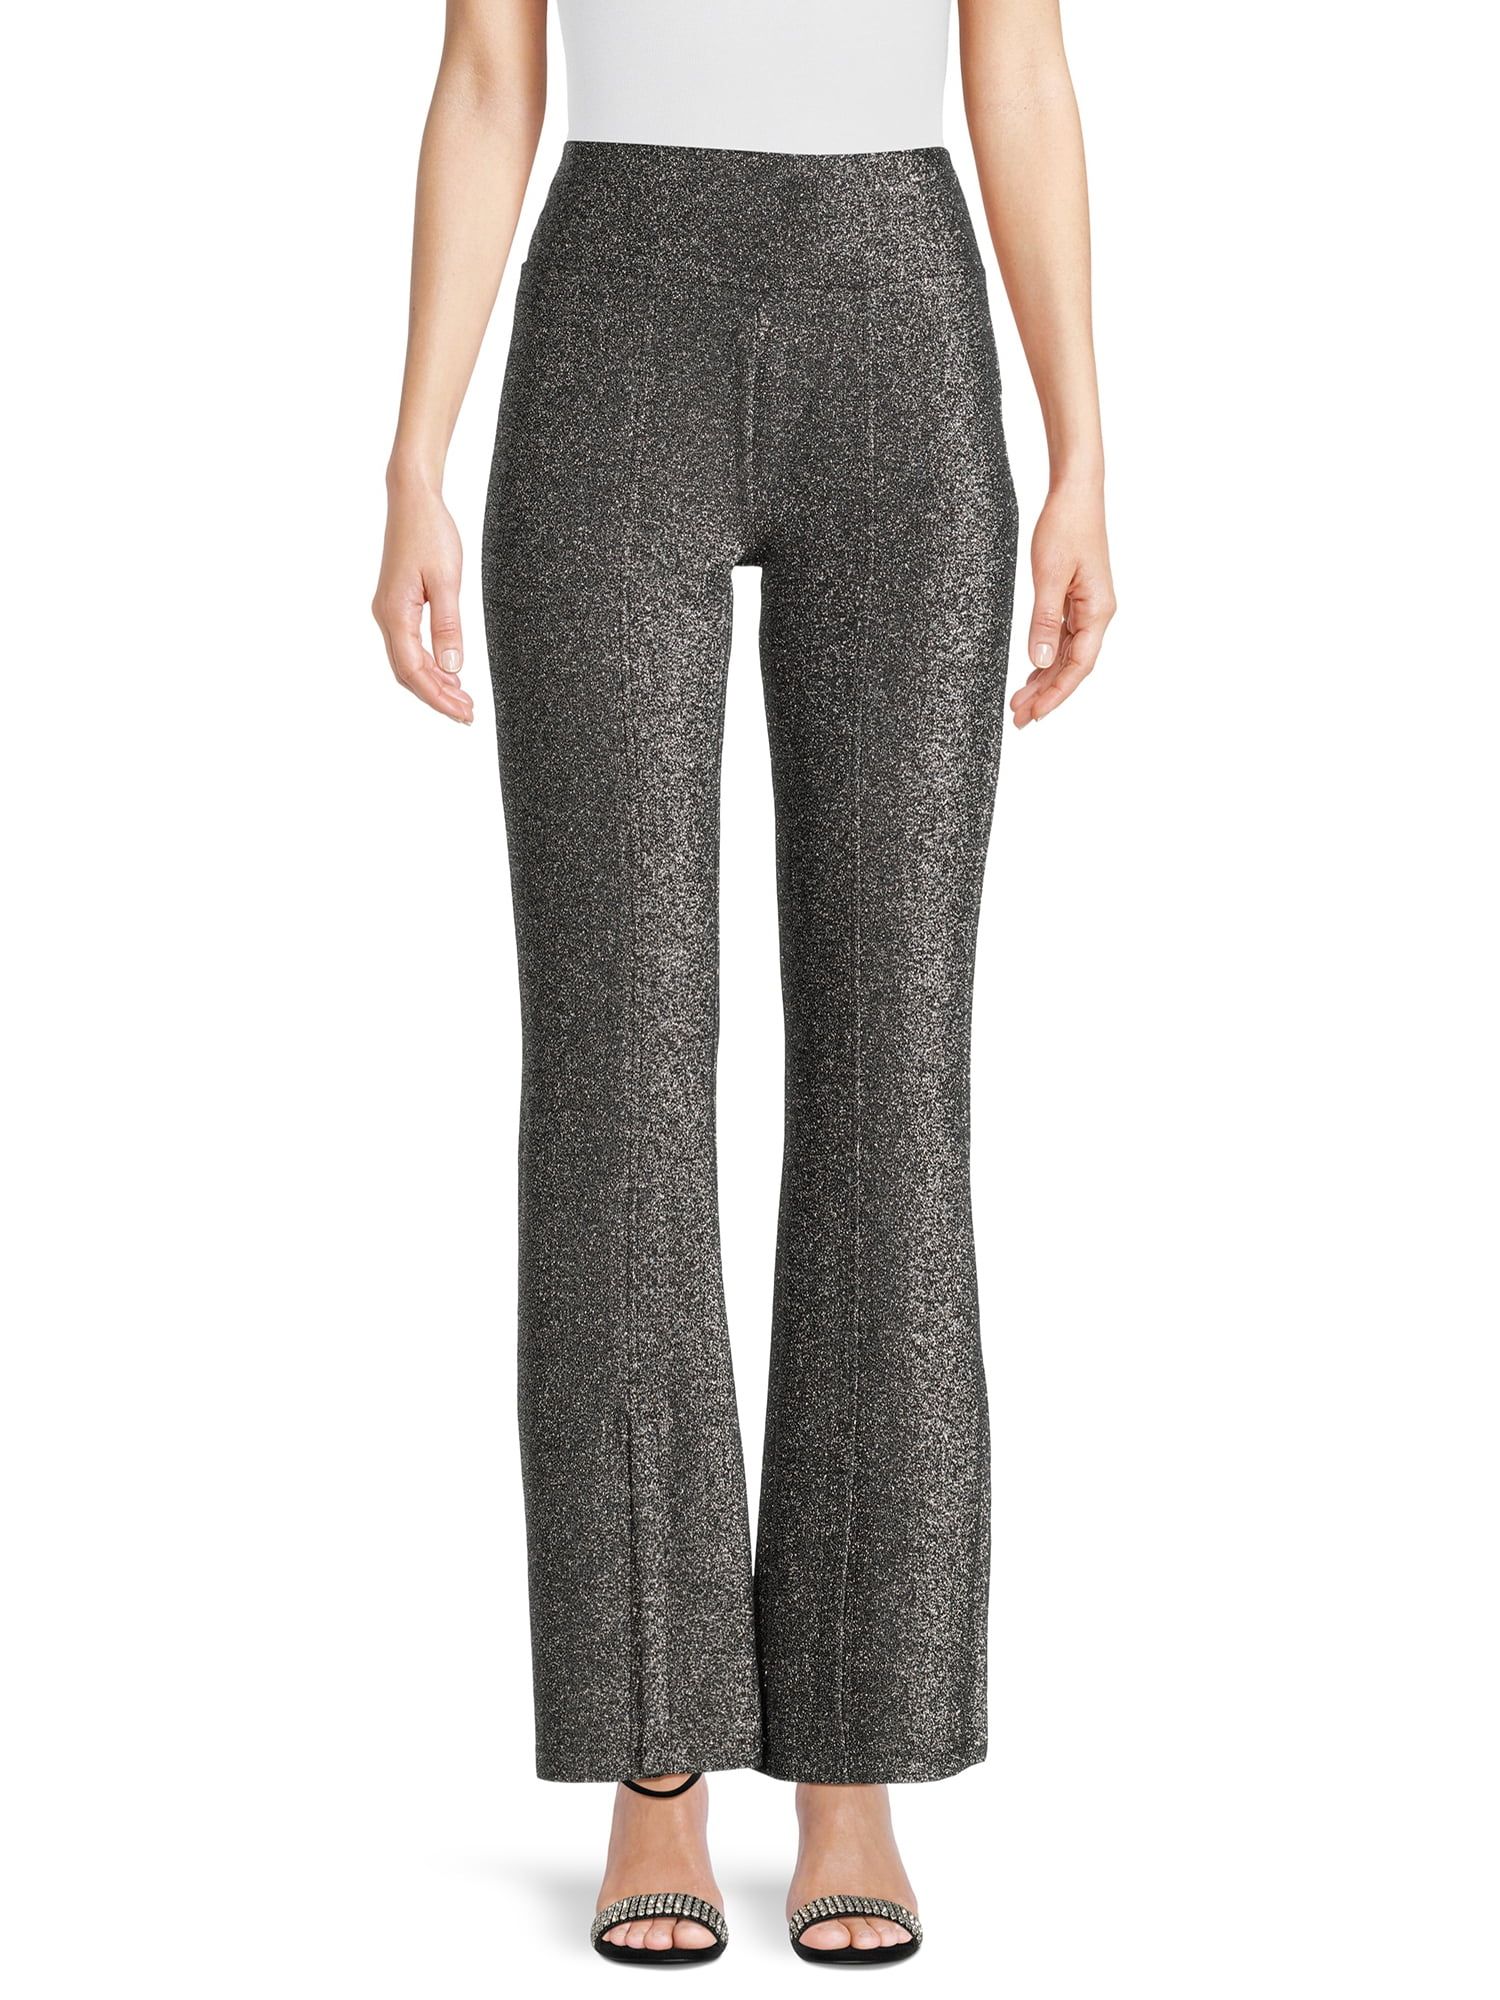 Madden NYC Women's Metallic Pants, 31” Inseam, Sizes XS-XXXL | Walmart (US)